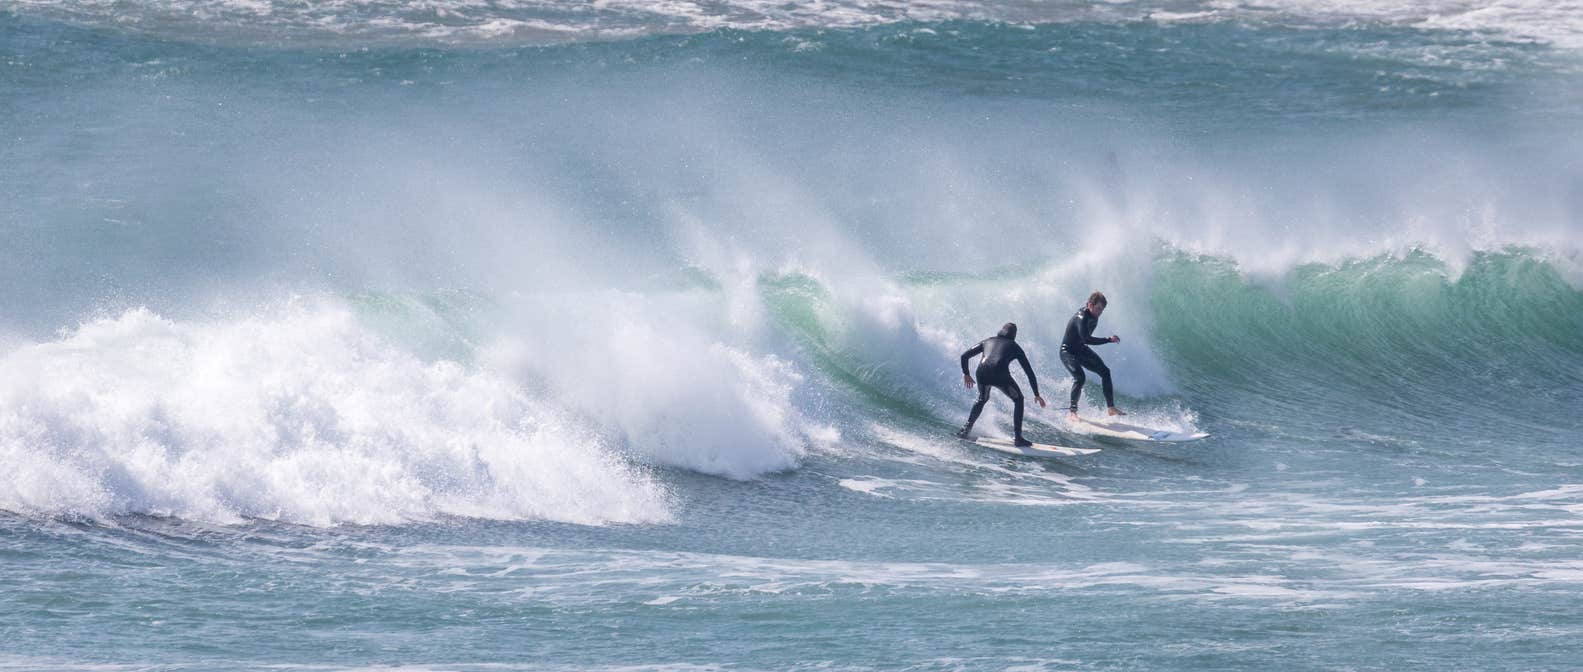 Two surfers at Garretstown Beach in Co Cork